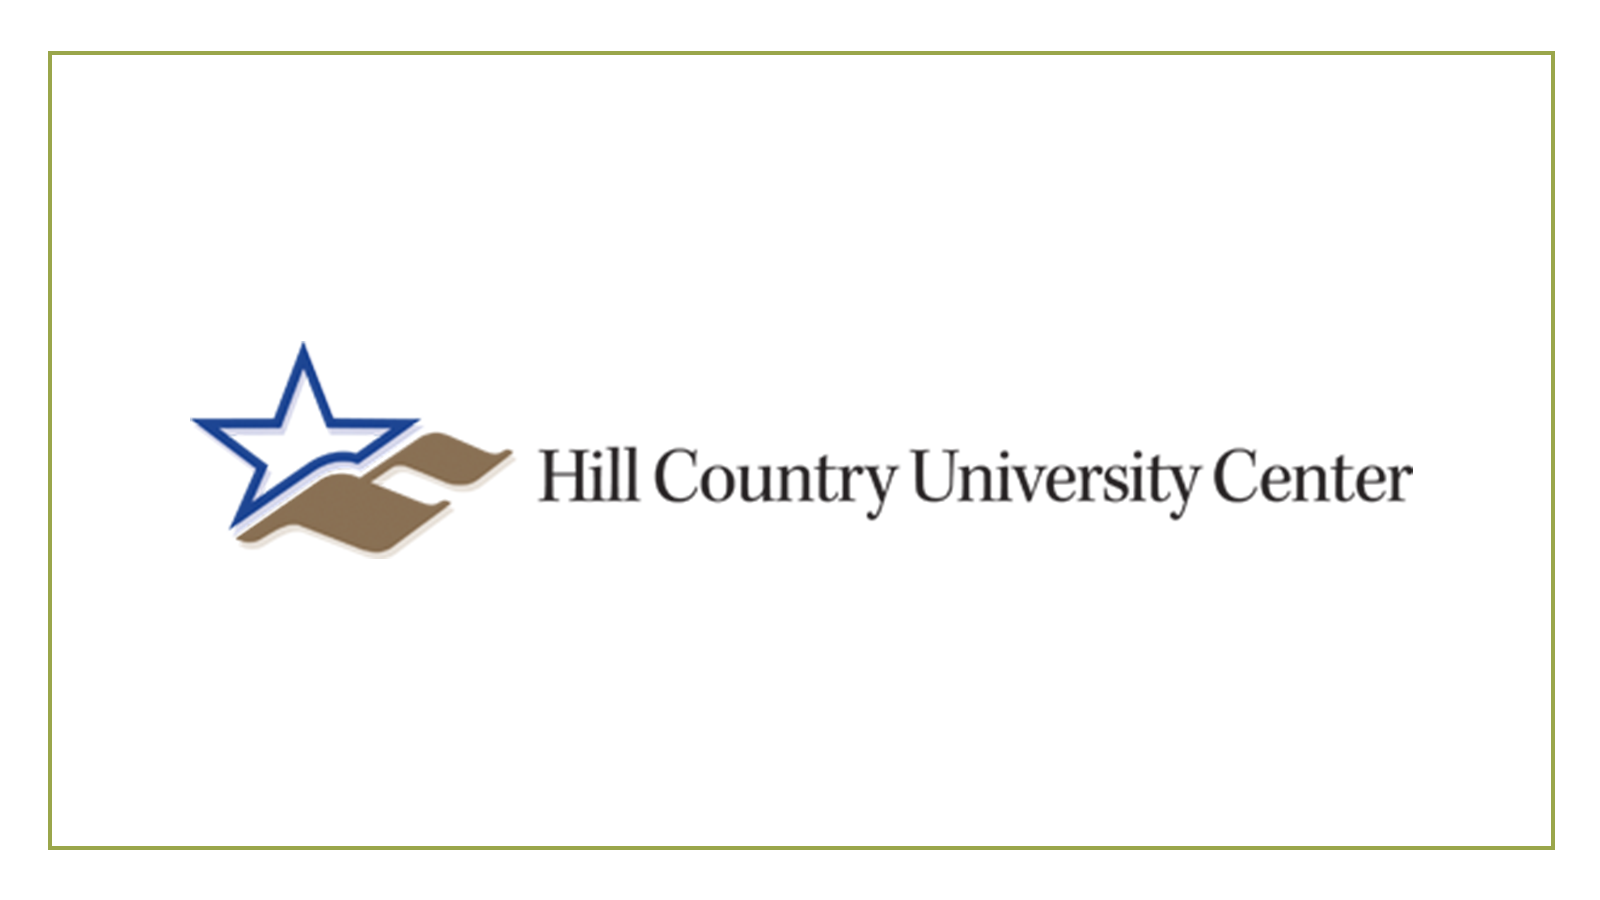 Hill Country University Center logo